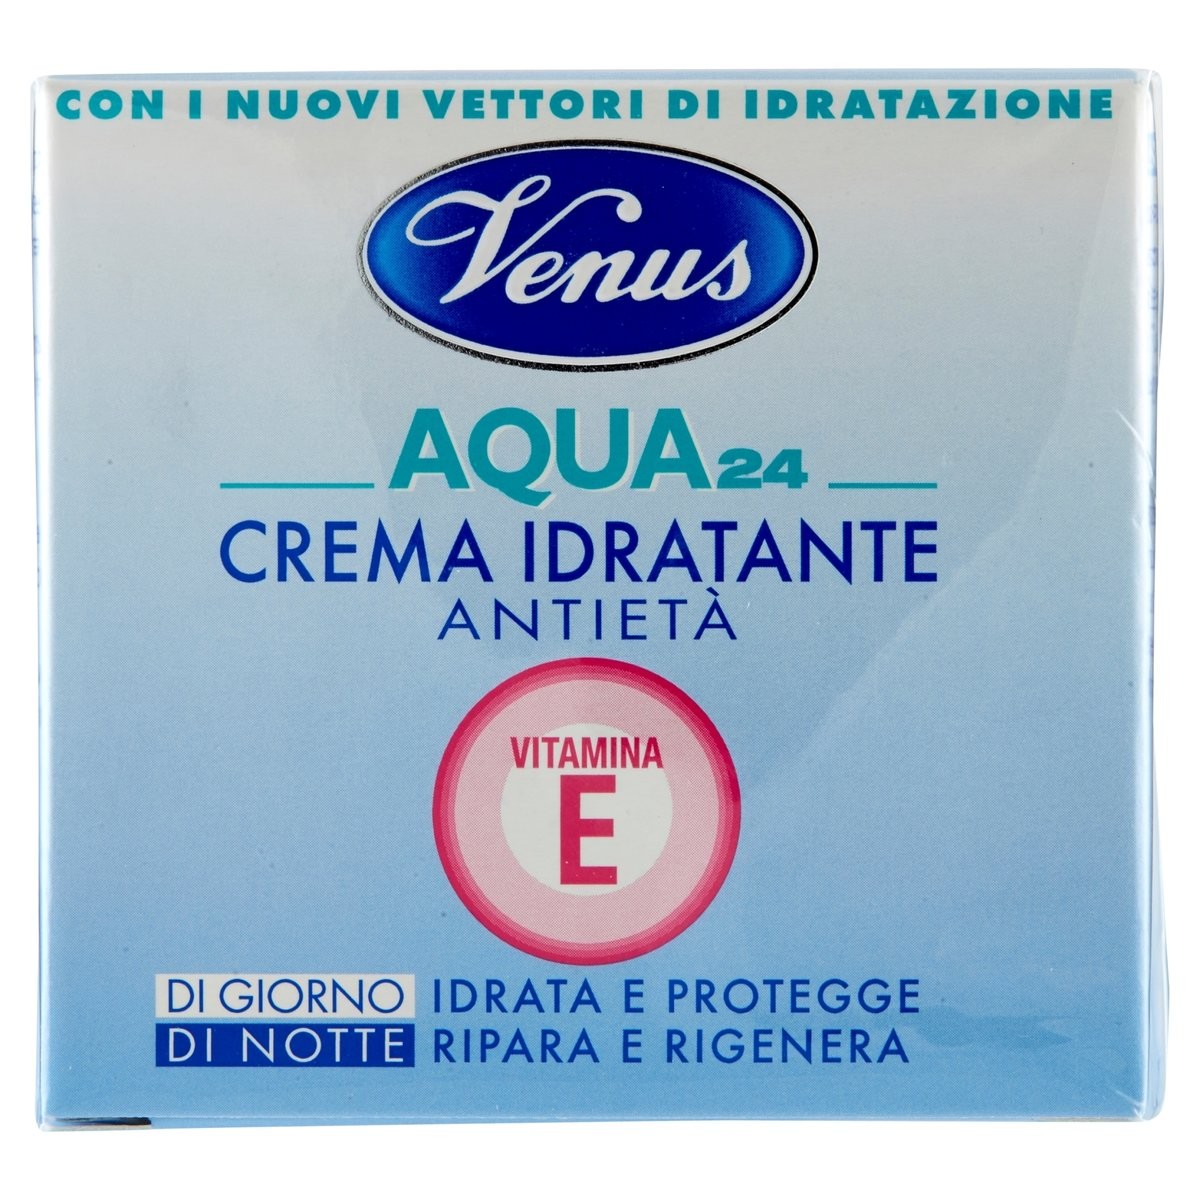 Venus Crema idratante antietà Aqua24